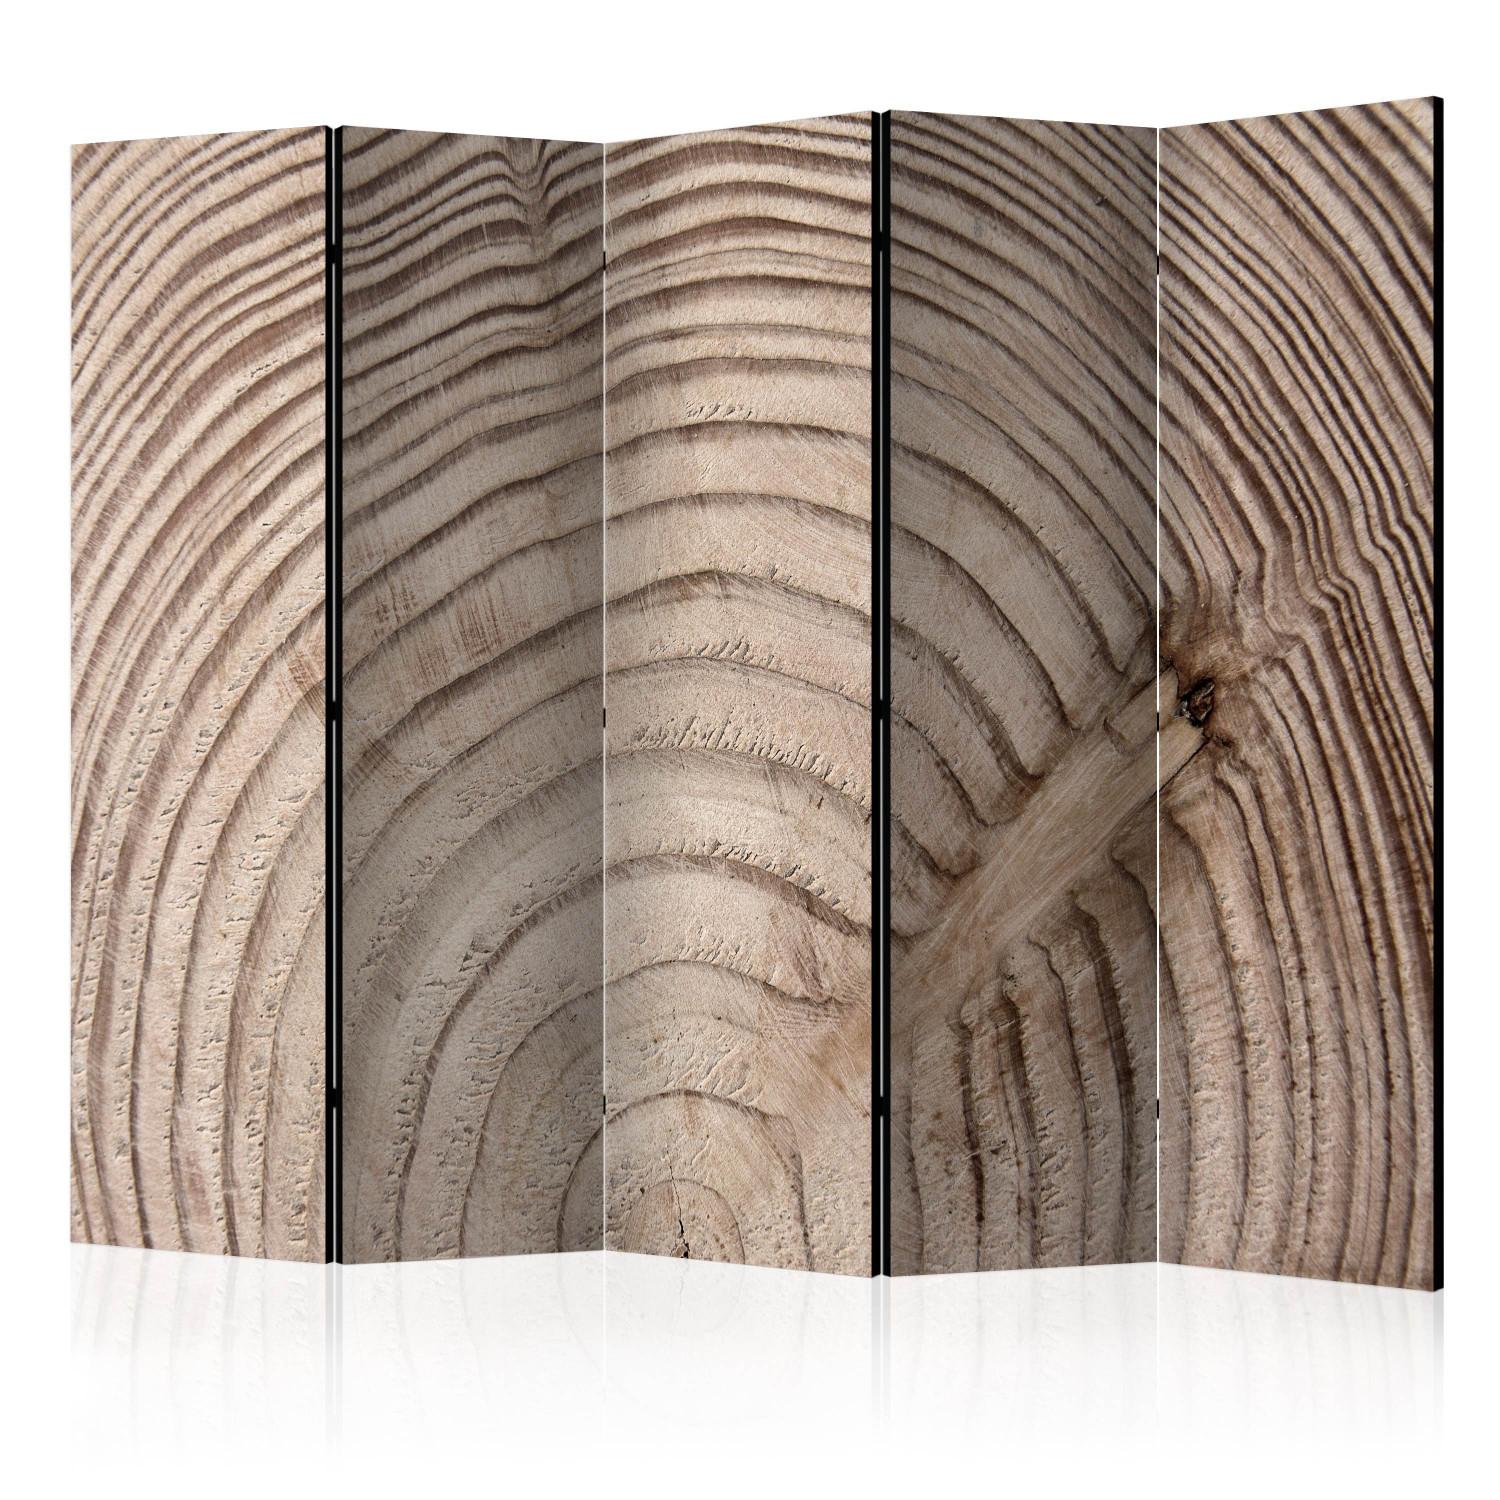 Biombo decorativo Tronco de madera II - madera clara